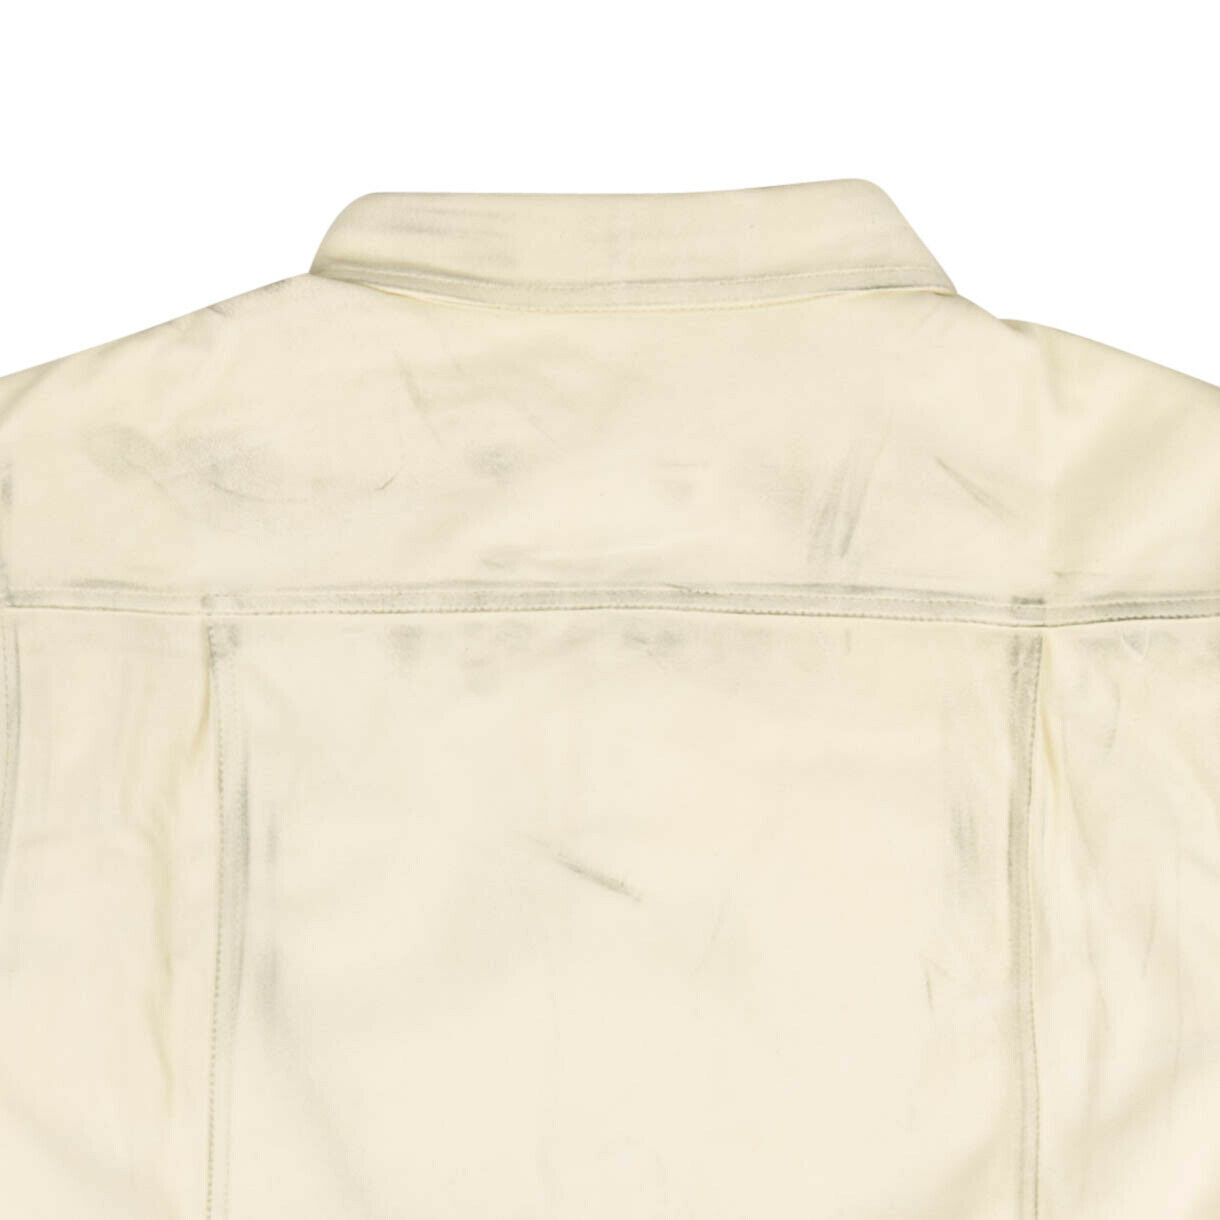 424 On Fairfax Painted Leather Jacket - White